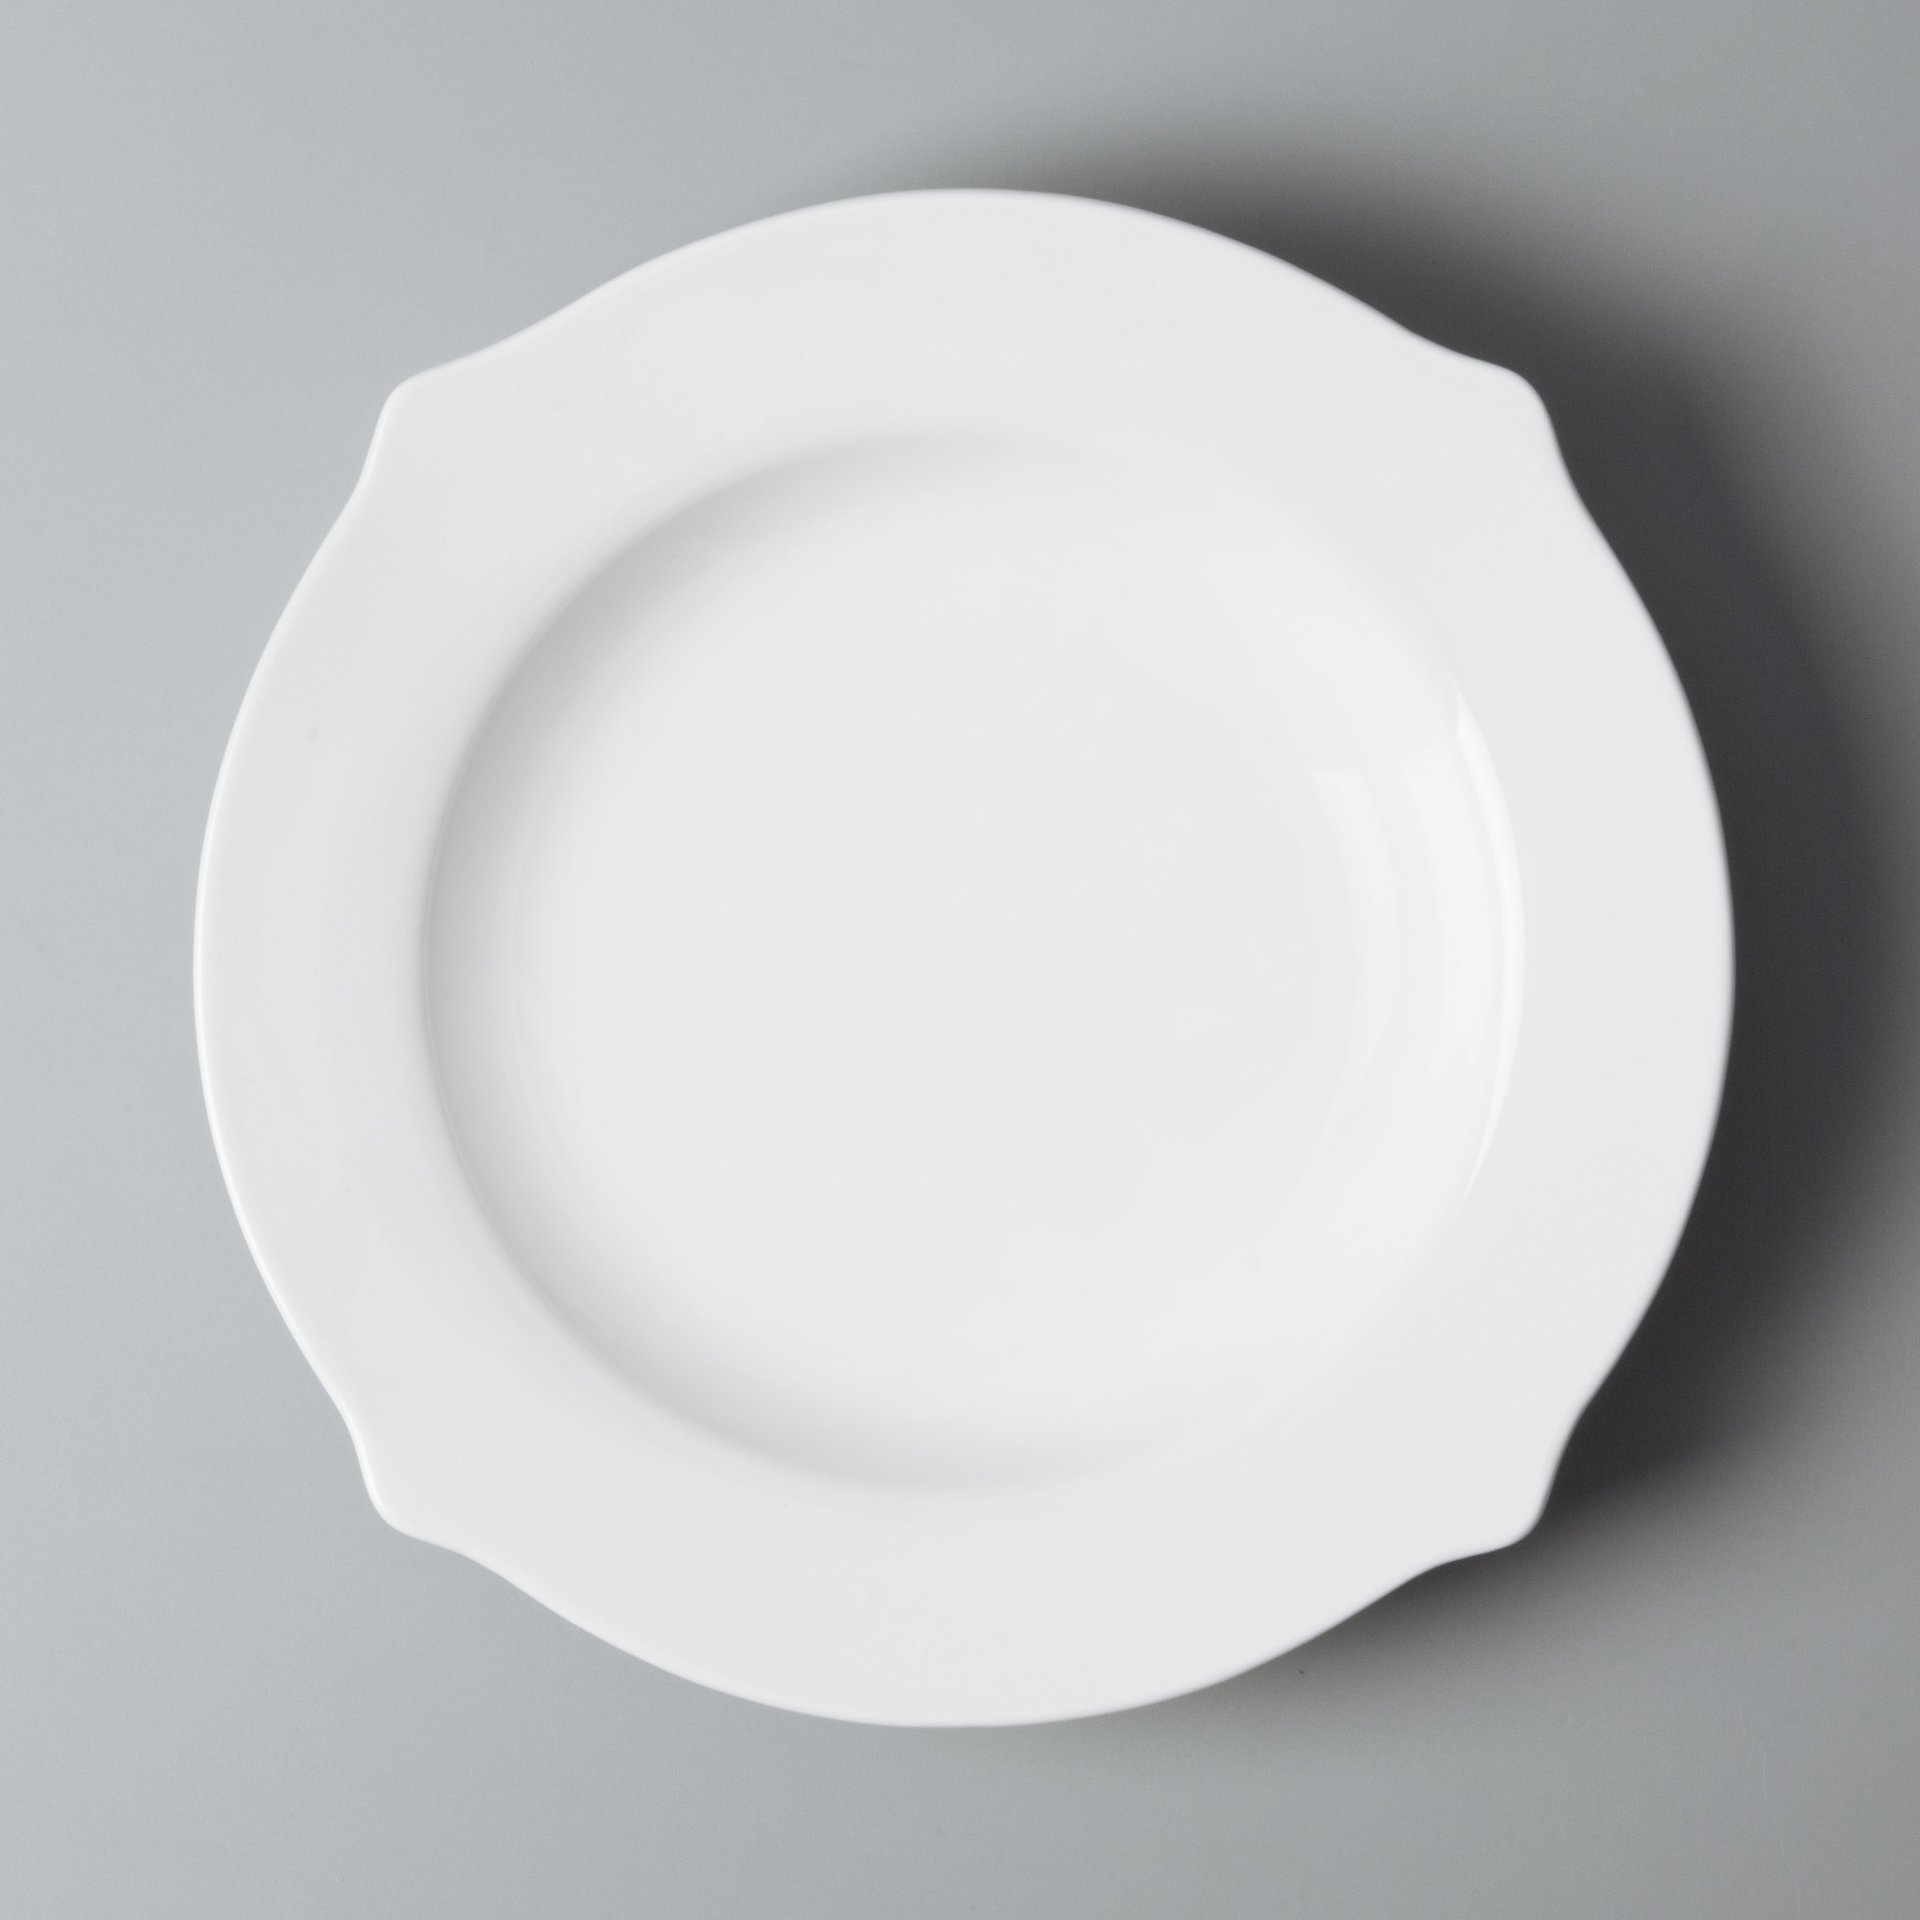 german vietnamese Two Eight Brand white porcelain tableware factory